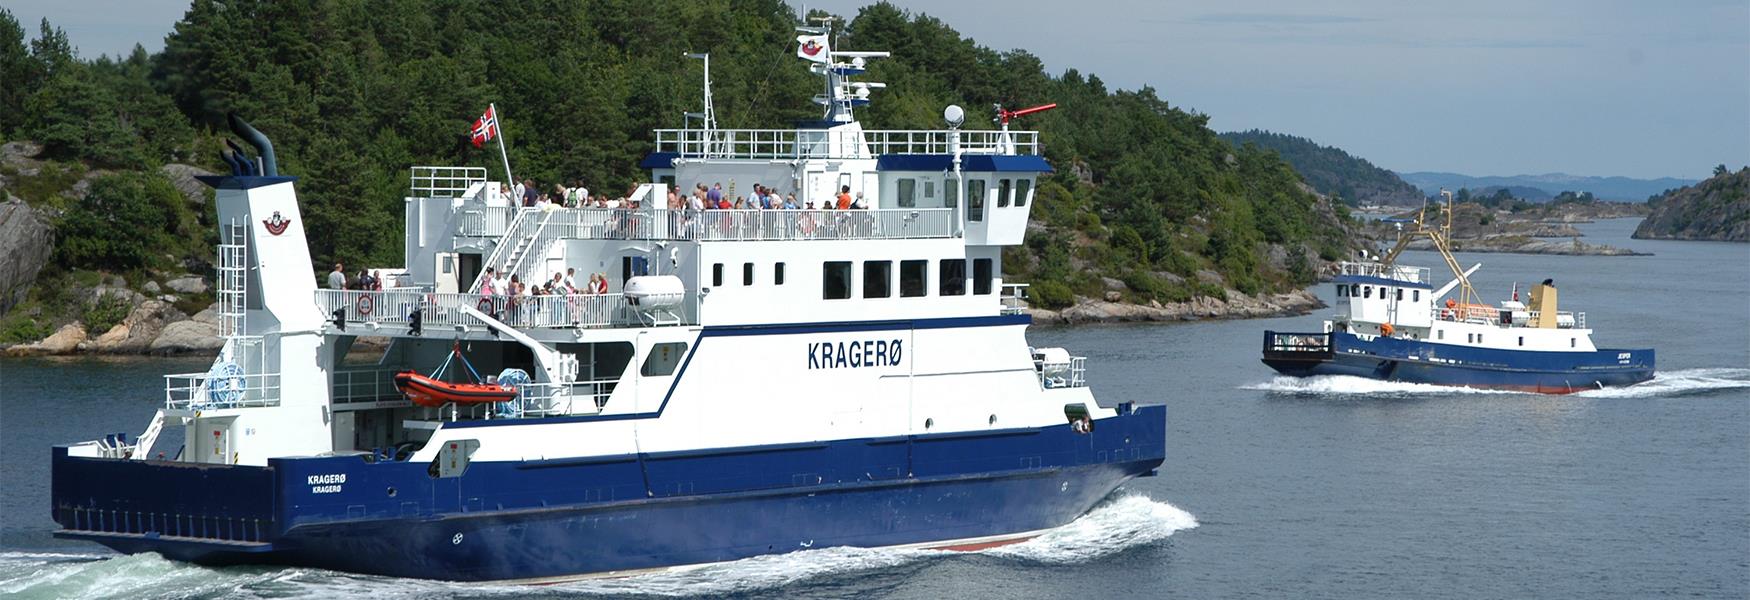 Ferries in the Kragerø archipelago